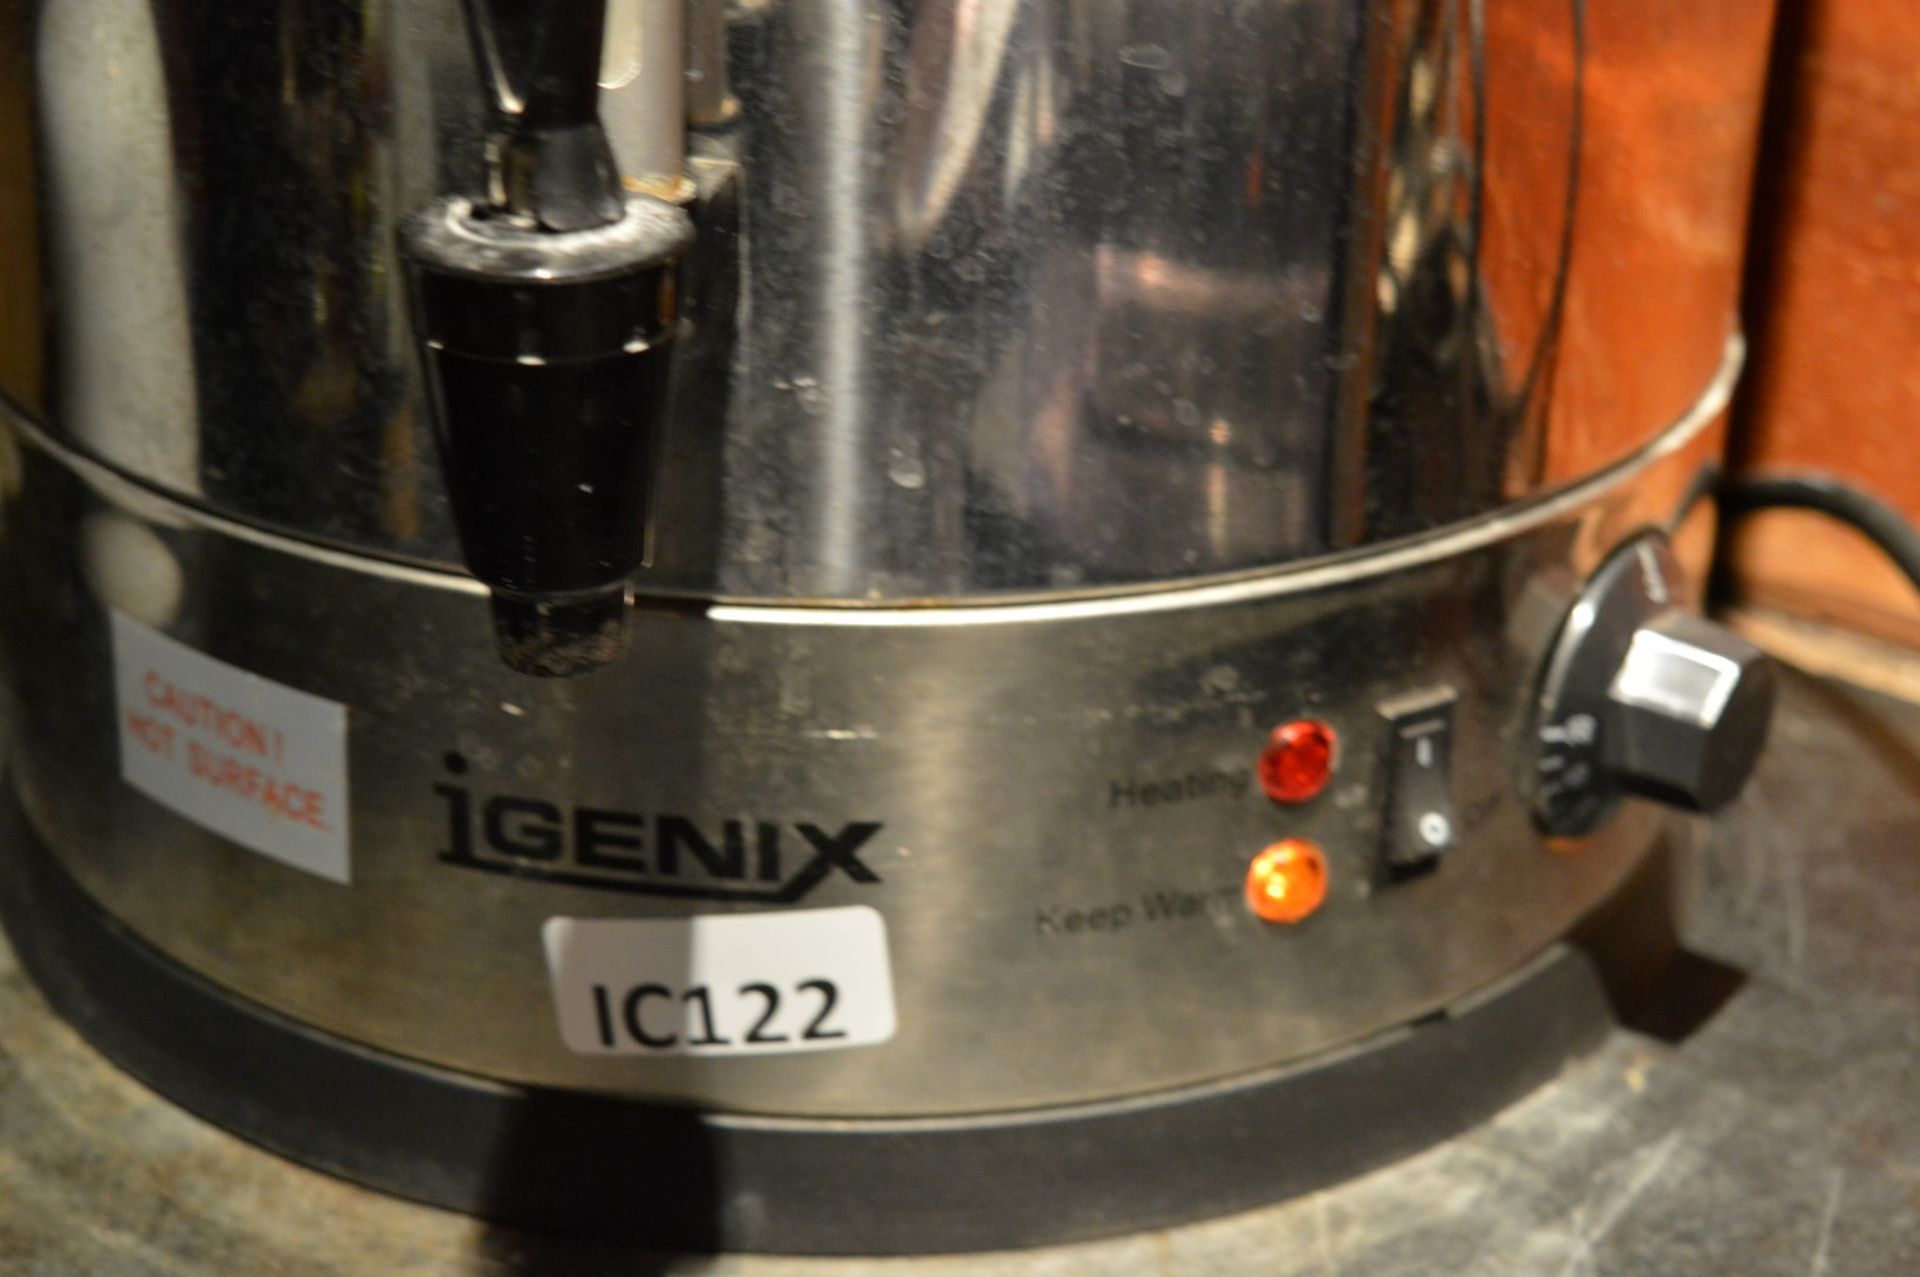 1 x Igenix 30 Litre Tea Urn & Hot Water Dispenser - 240v - CL180 - Ref IC122 - Location: London - Image 2 of 2